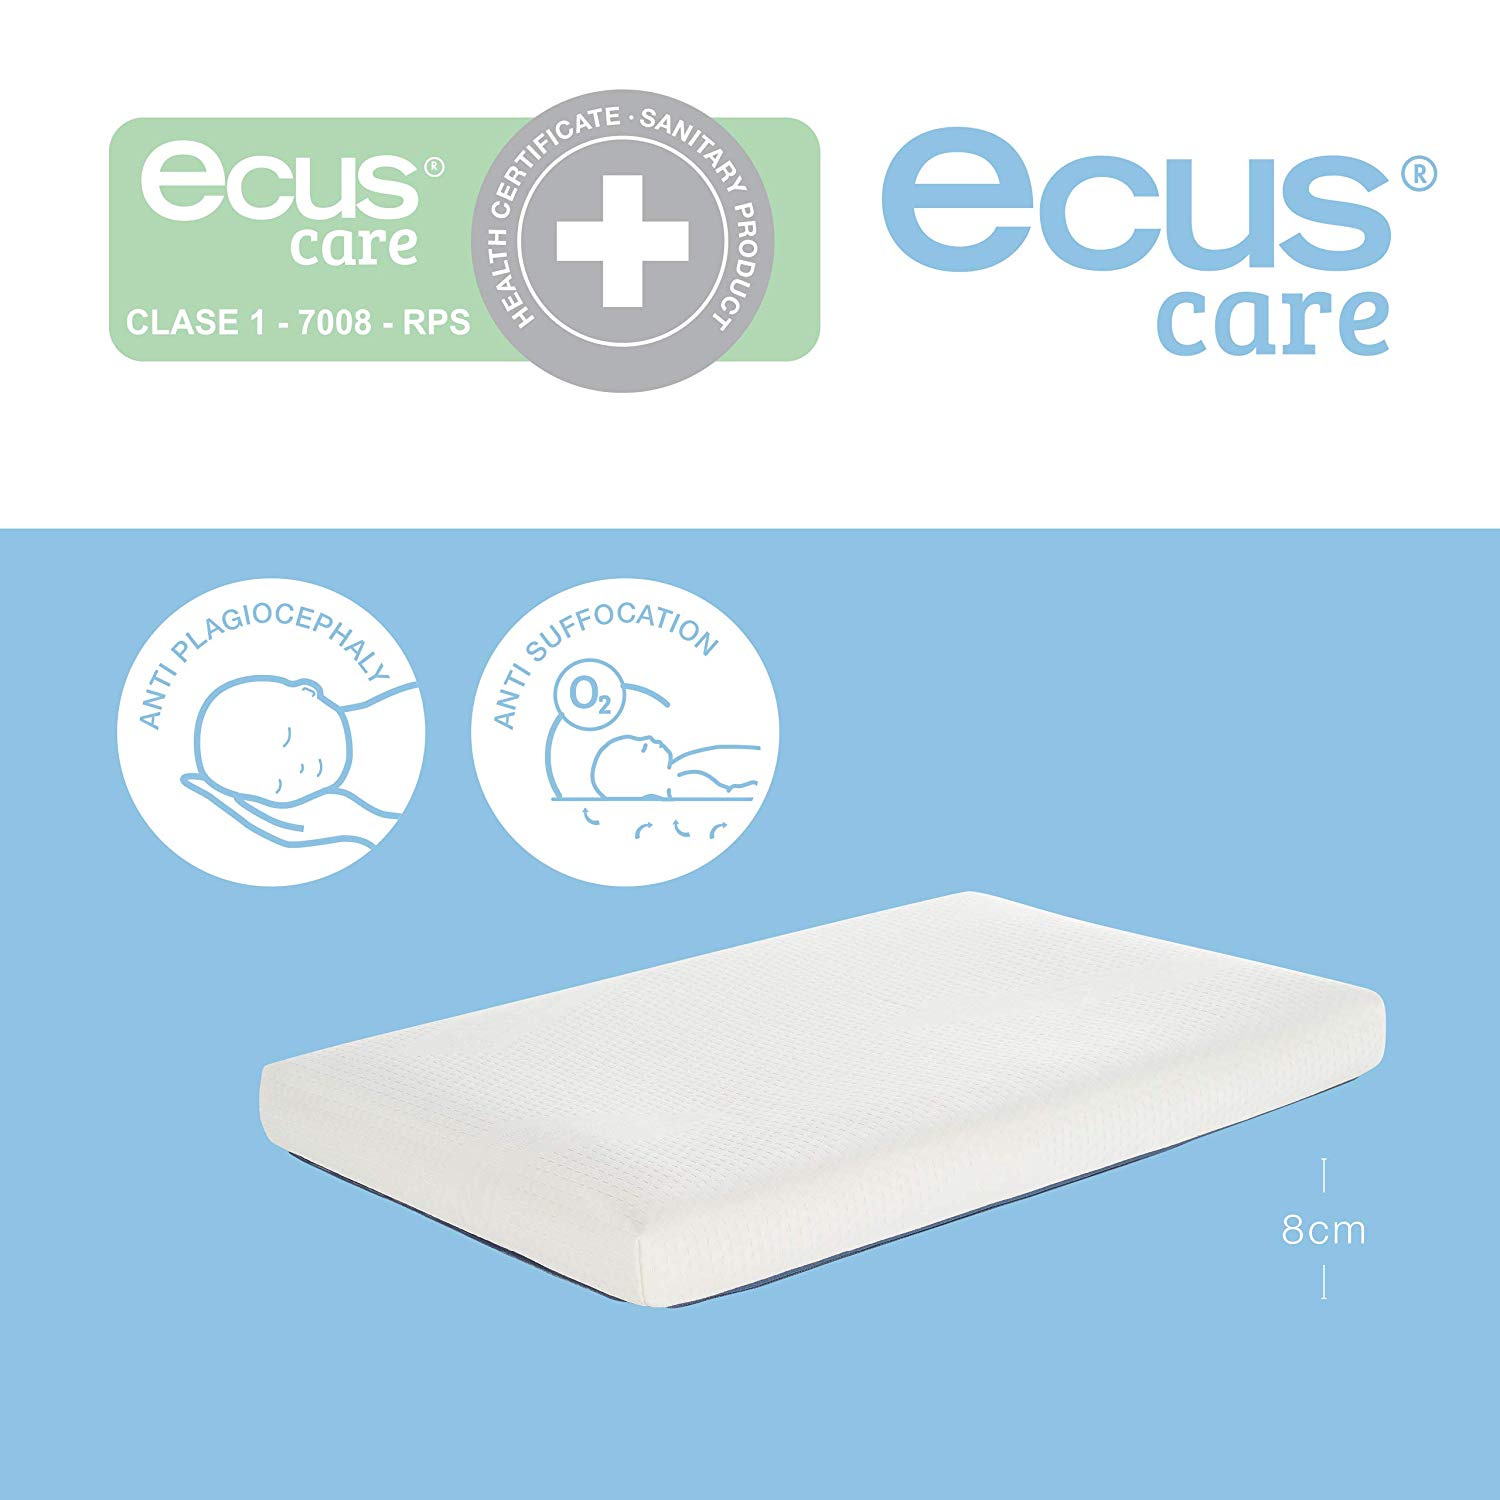 Ecus Kids Ecus Care Cot Mattress - The Baby Mattress without Choking